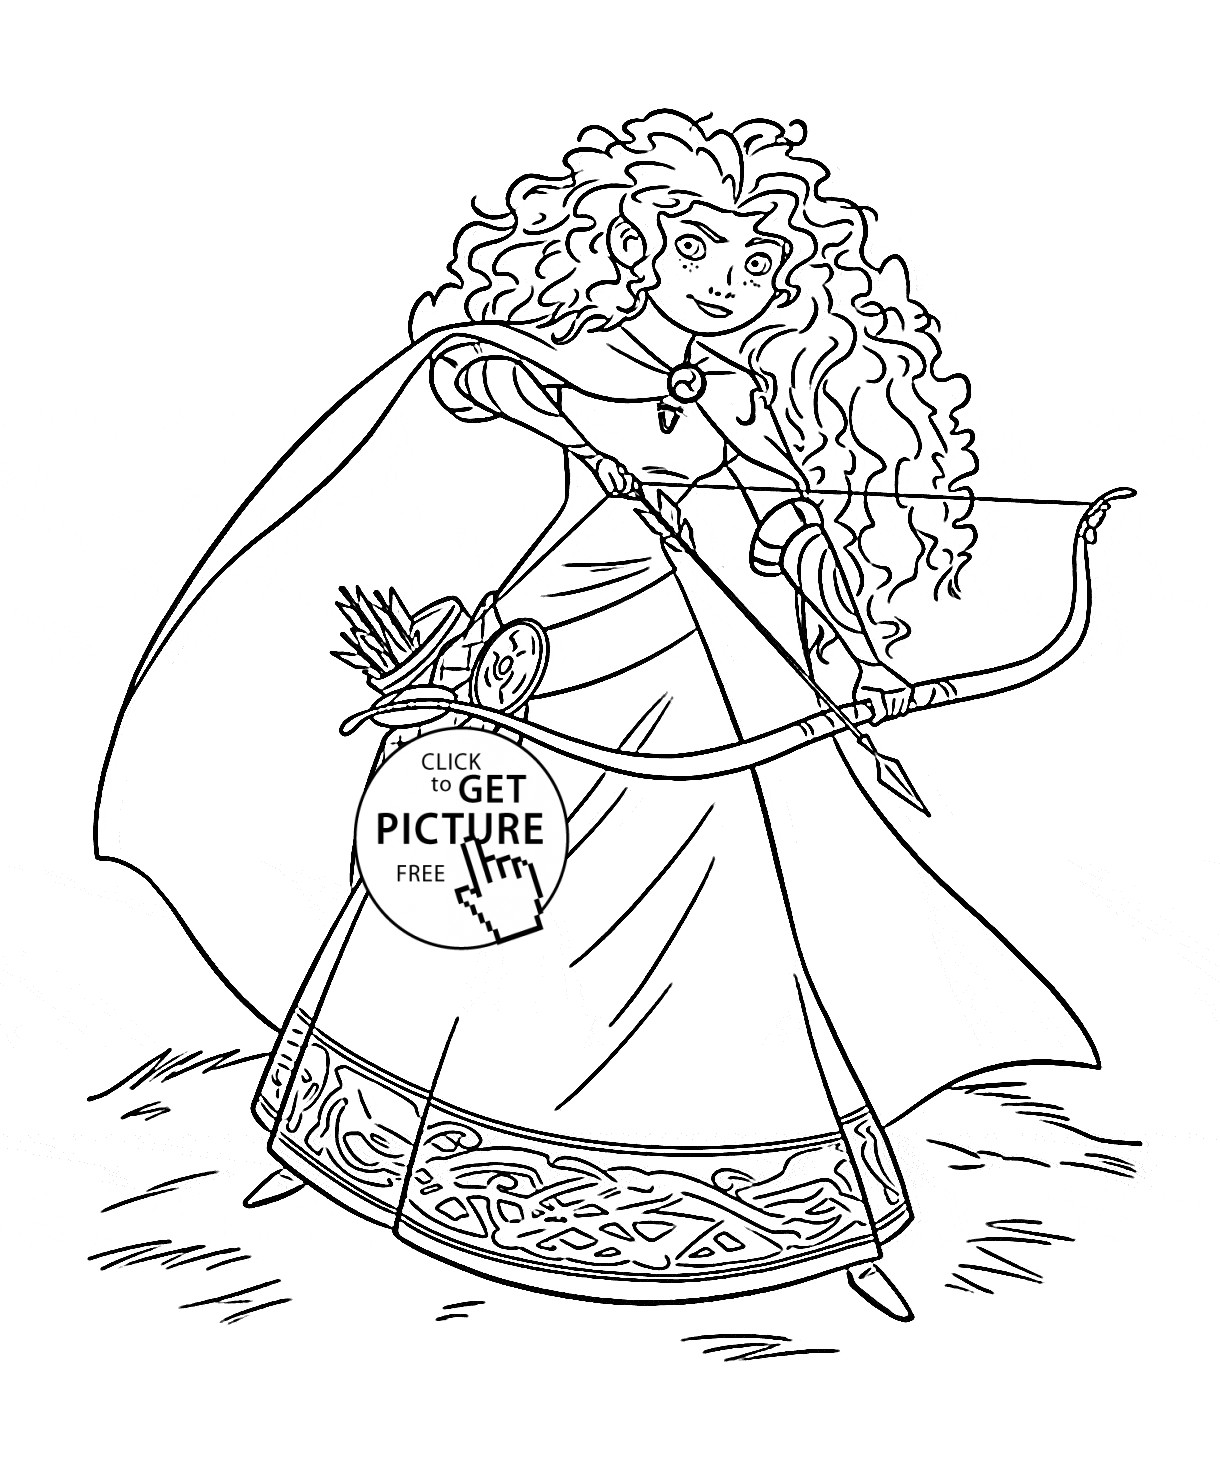 disney-princess-coloring-pages-merida-of-disney-princess-coloring-pages-merida Disney Princess Coloring Pages Merida Cartoon 